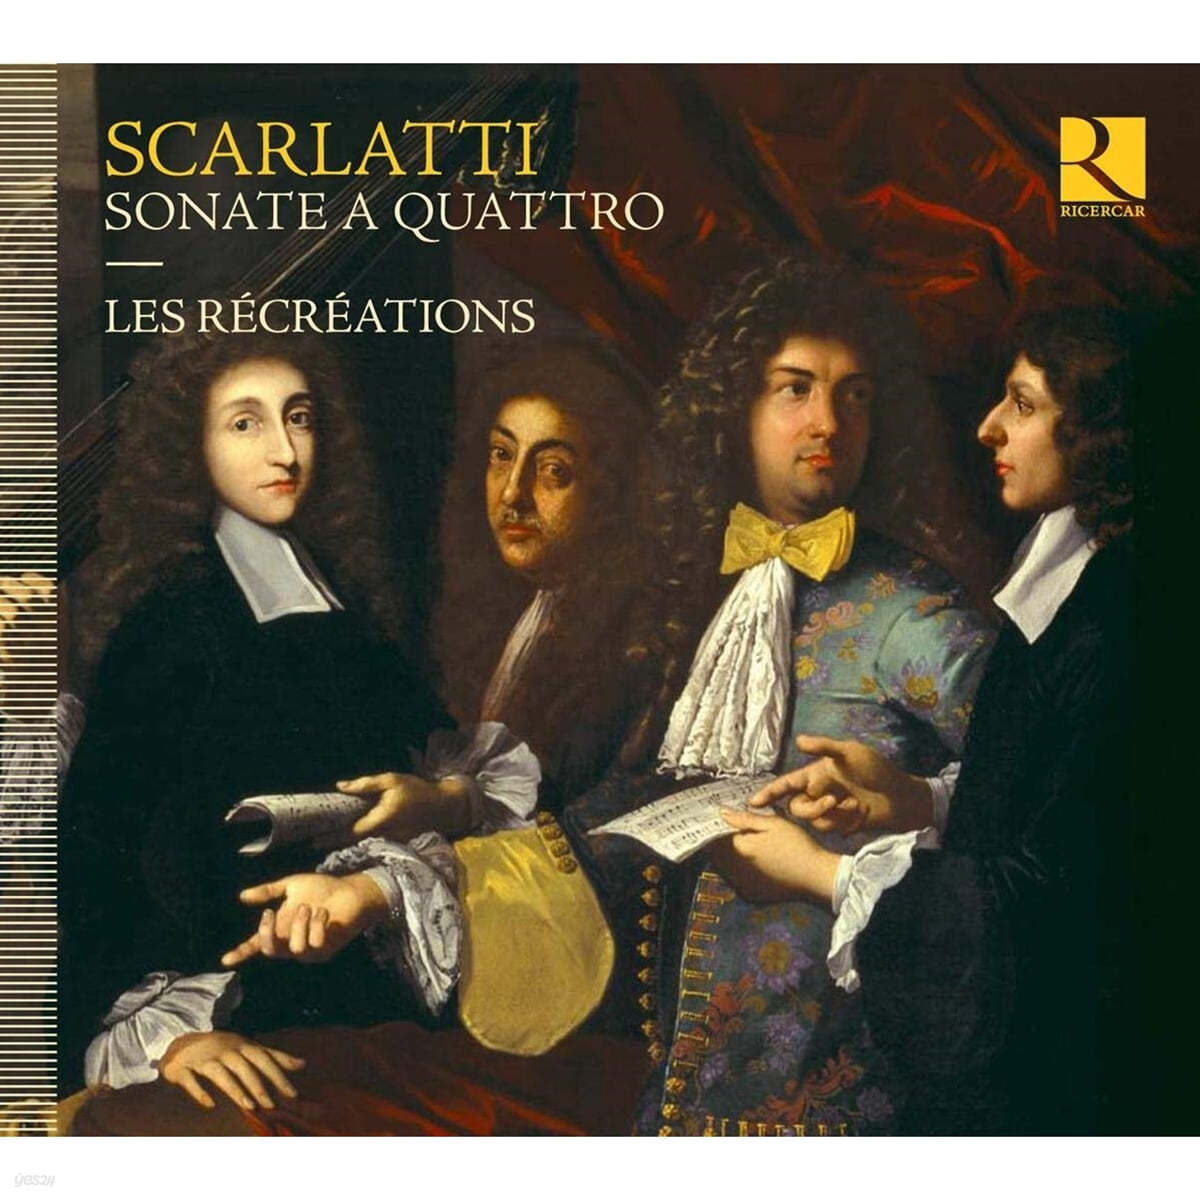 Les Recreations 알레산드로 스카를라티: 최초의 현악 사중주 '4성 소나타' (Alessandro Scarlatti: Sonate A Quattro) 